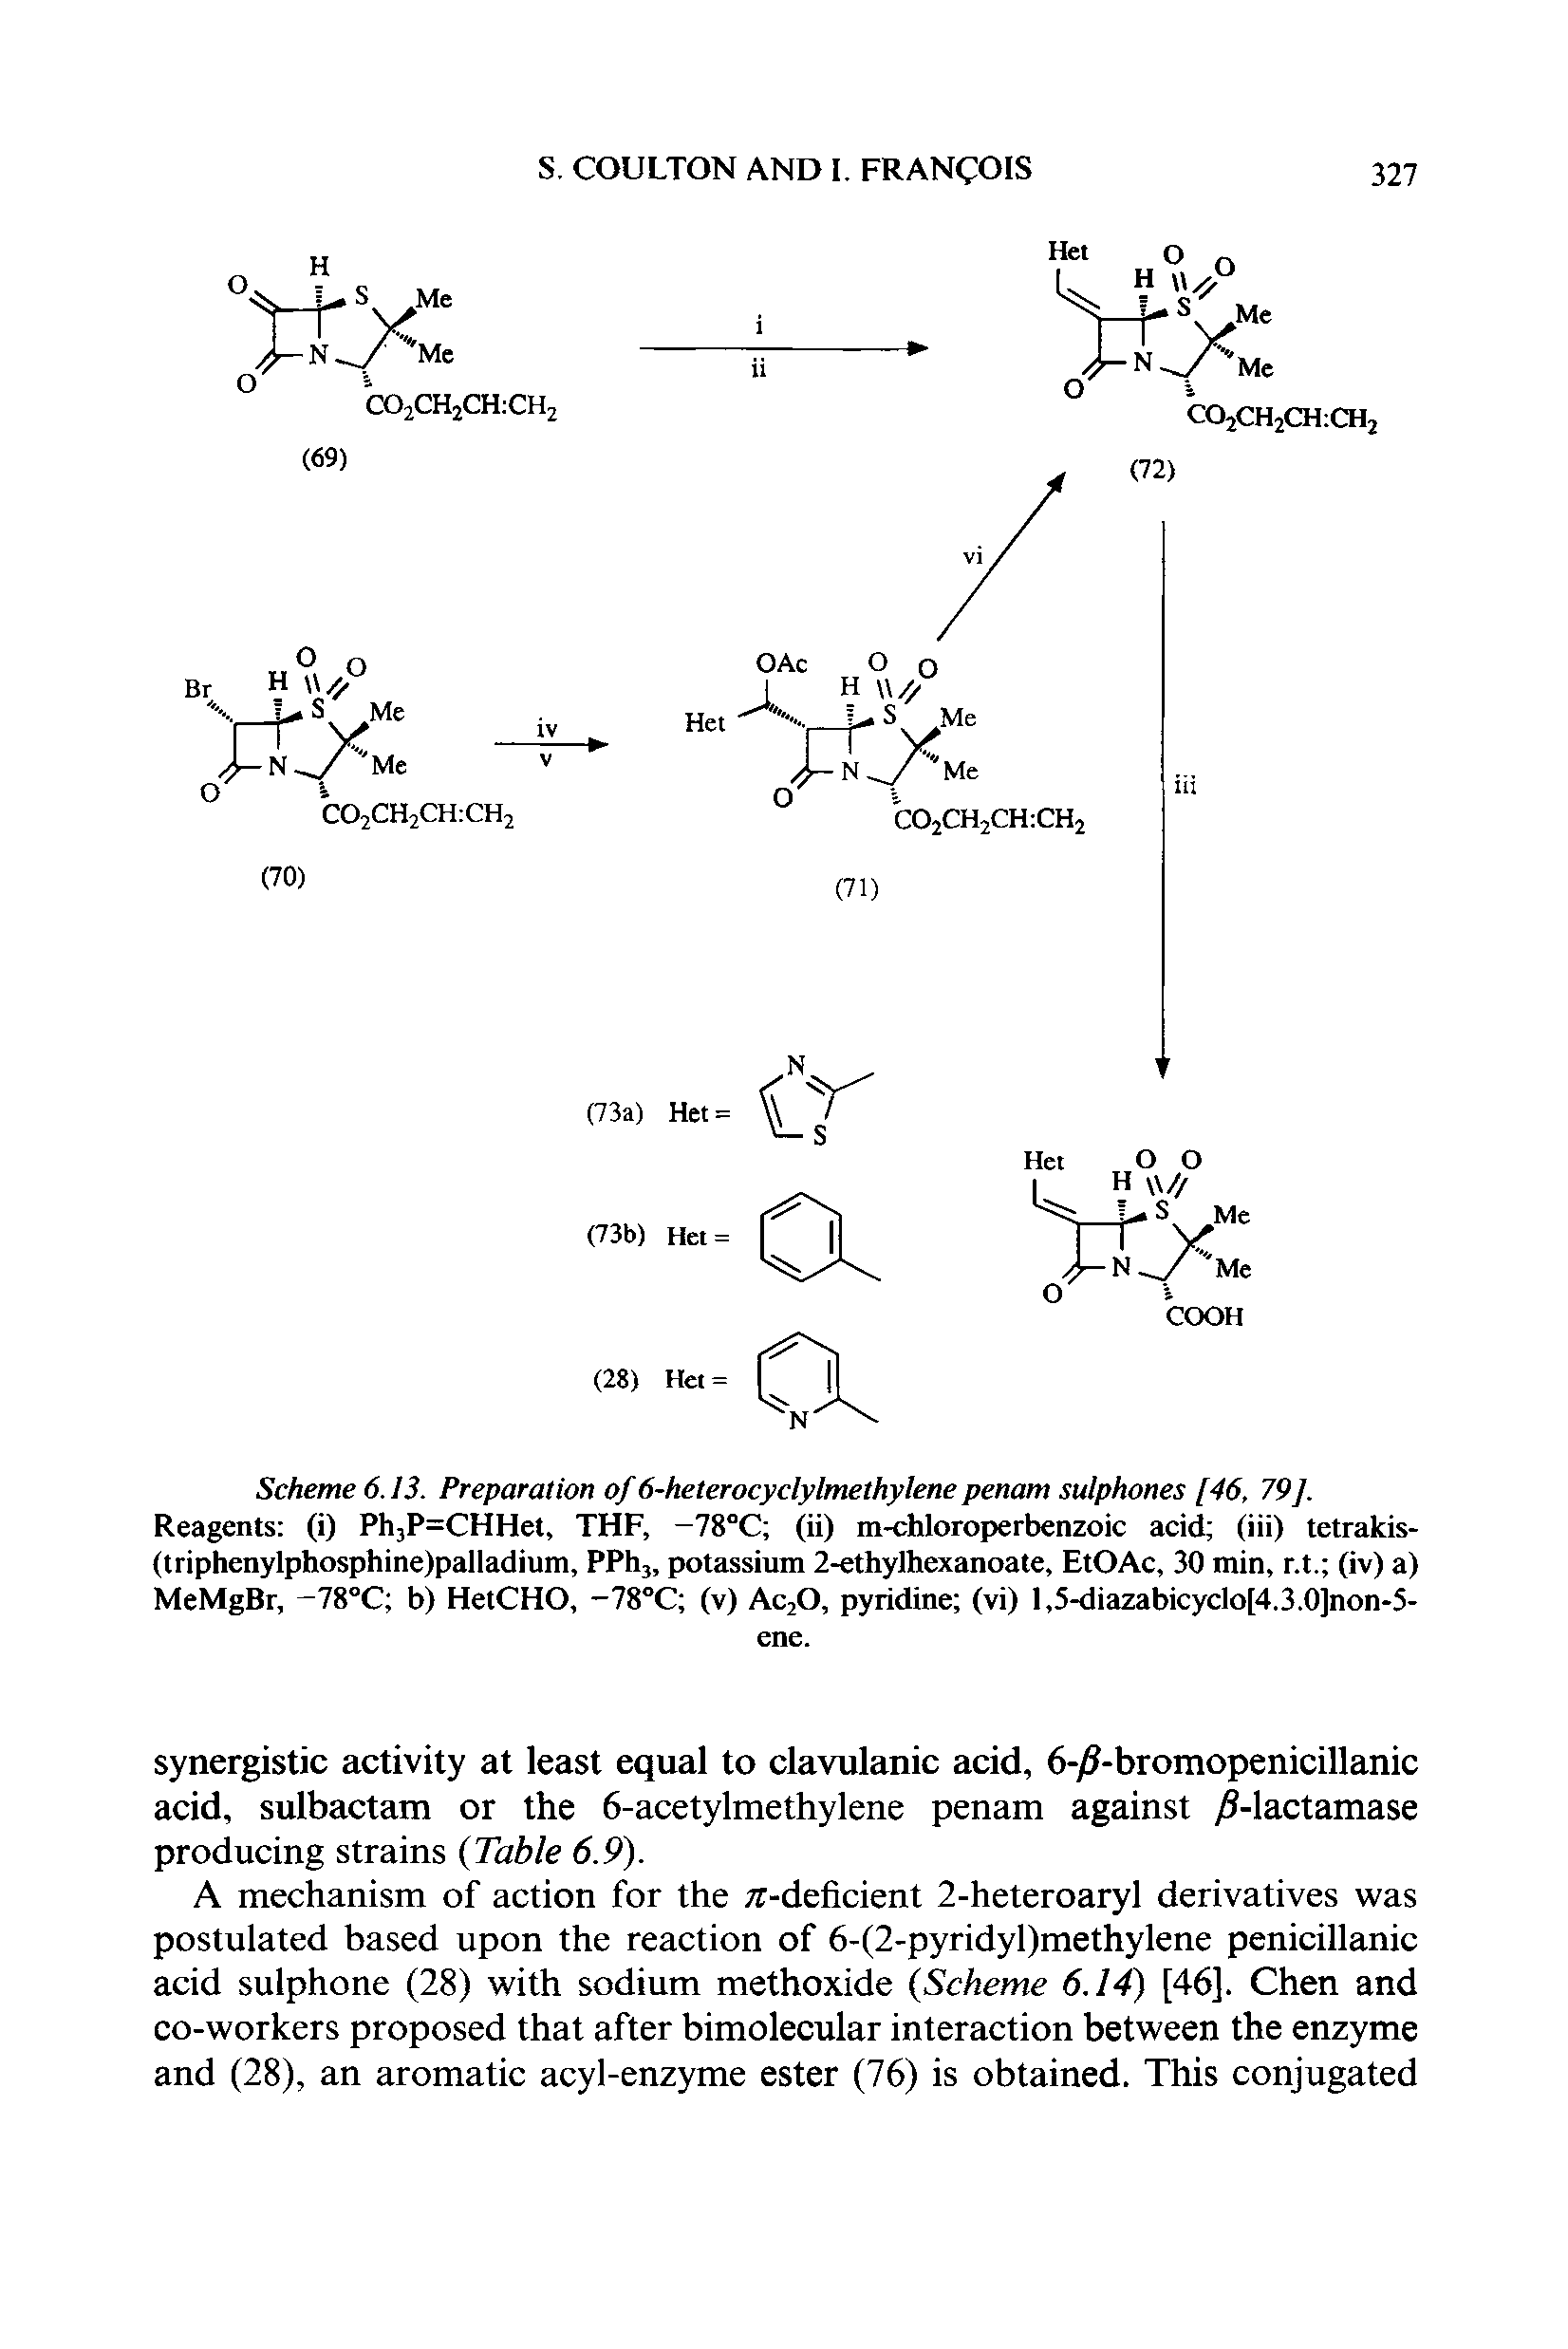 Scheme 6.13. Preparation of 6-heterocyclylmethyIene penam sulphones [46, 79]. Reagents (i) Pli3P=CHHet, THF, -78°C (ii) m-chloroperbenzoic acid (iii) tetrakis-(triphenylphosphine)palladium, PPh, potassium 2-ethylhexanoate, EtOAc, 30 min, r.t. (iv) a) MeMgBr, -78°C b) HetCHO, -78°C (v) AC2O, pyridine (vi) l,5-diazabicyclo[4.3.0]non-5-...